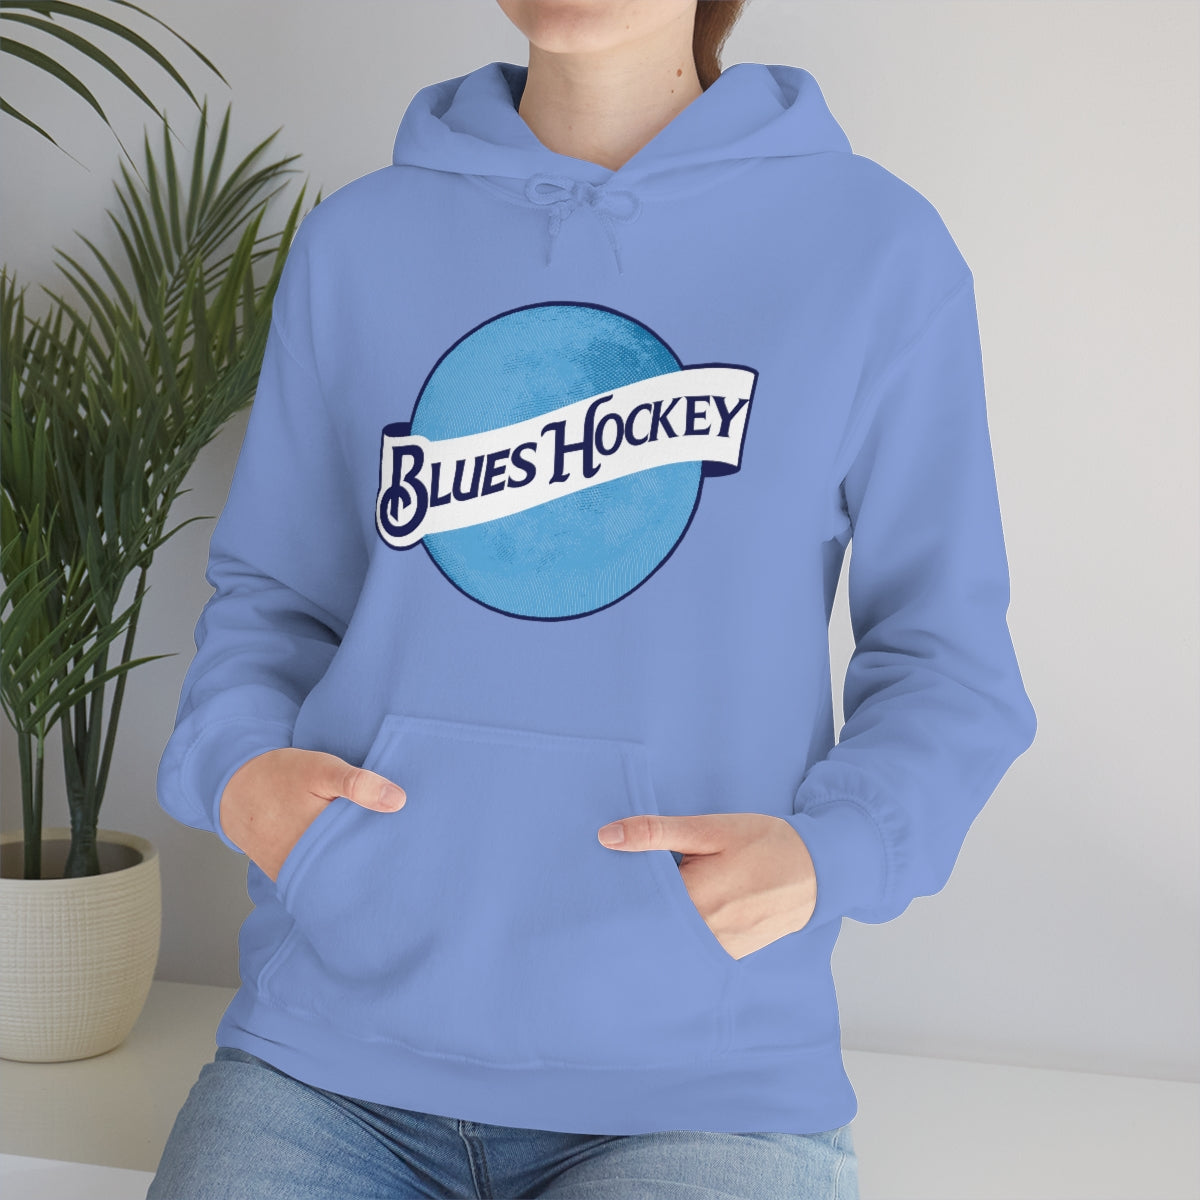 Blues Busch Hockey Hoodie Blues Buzz Store Merch